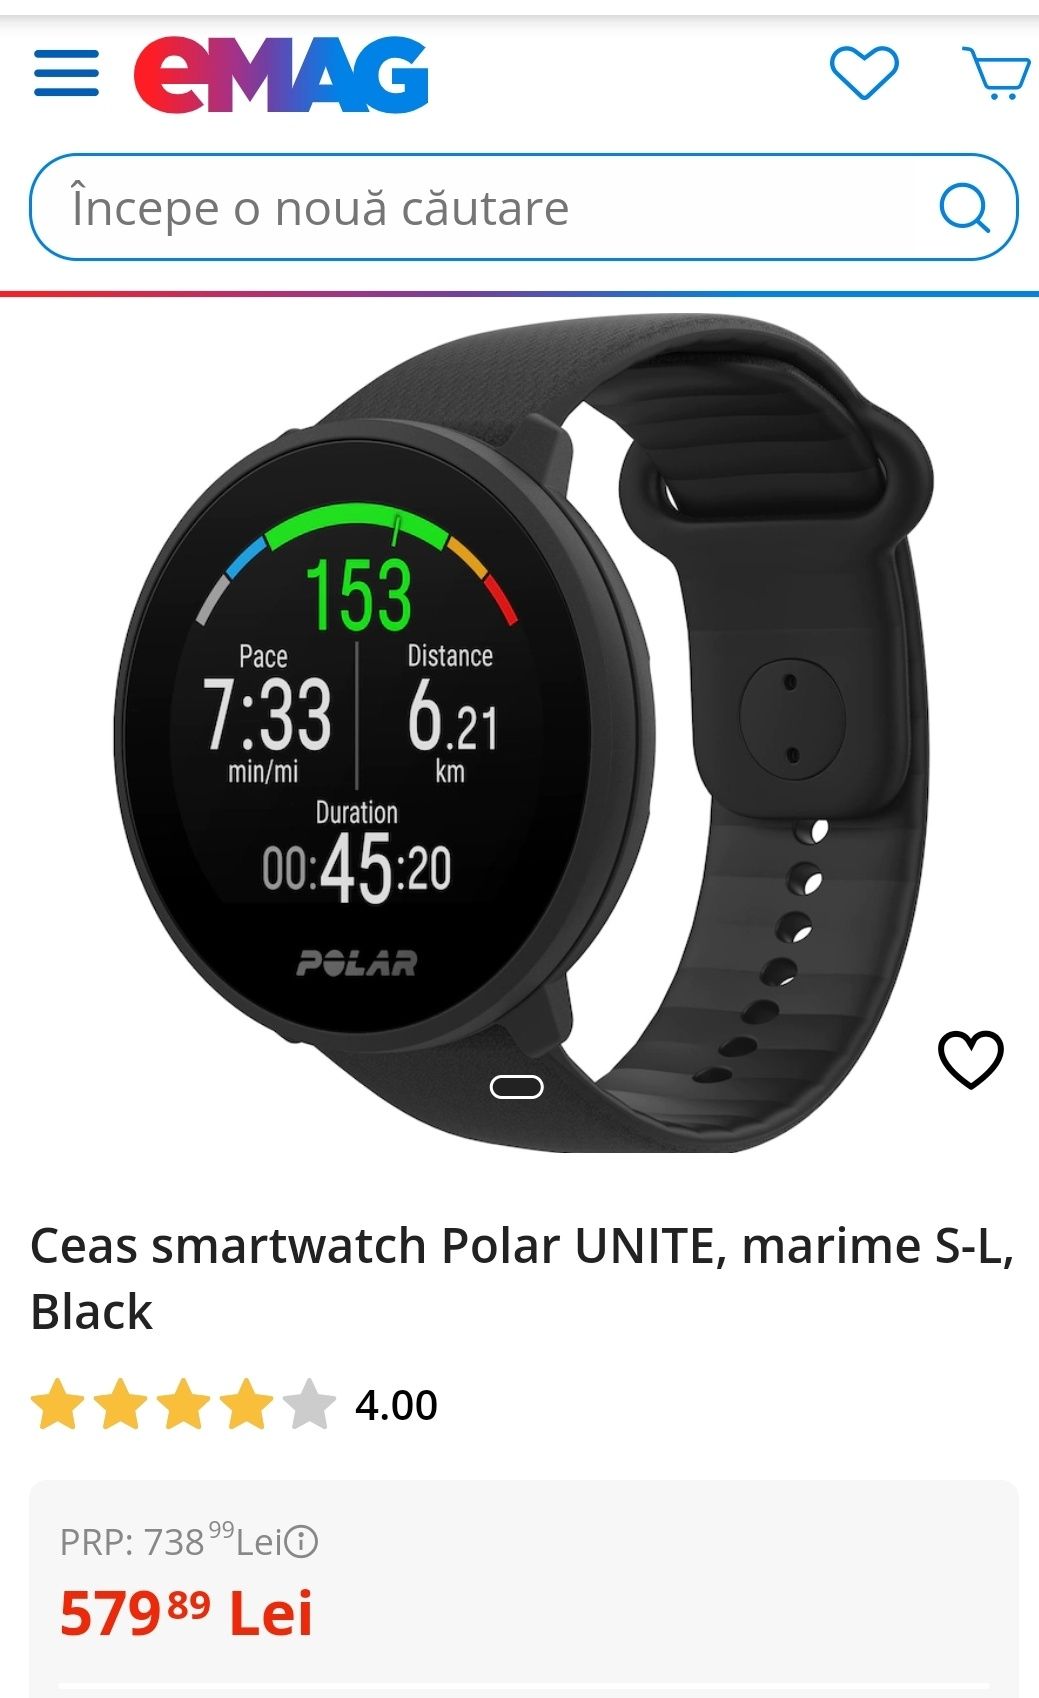 Ceas smartwatch Polar UNITE, marime S-L, Black